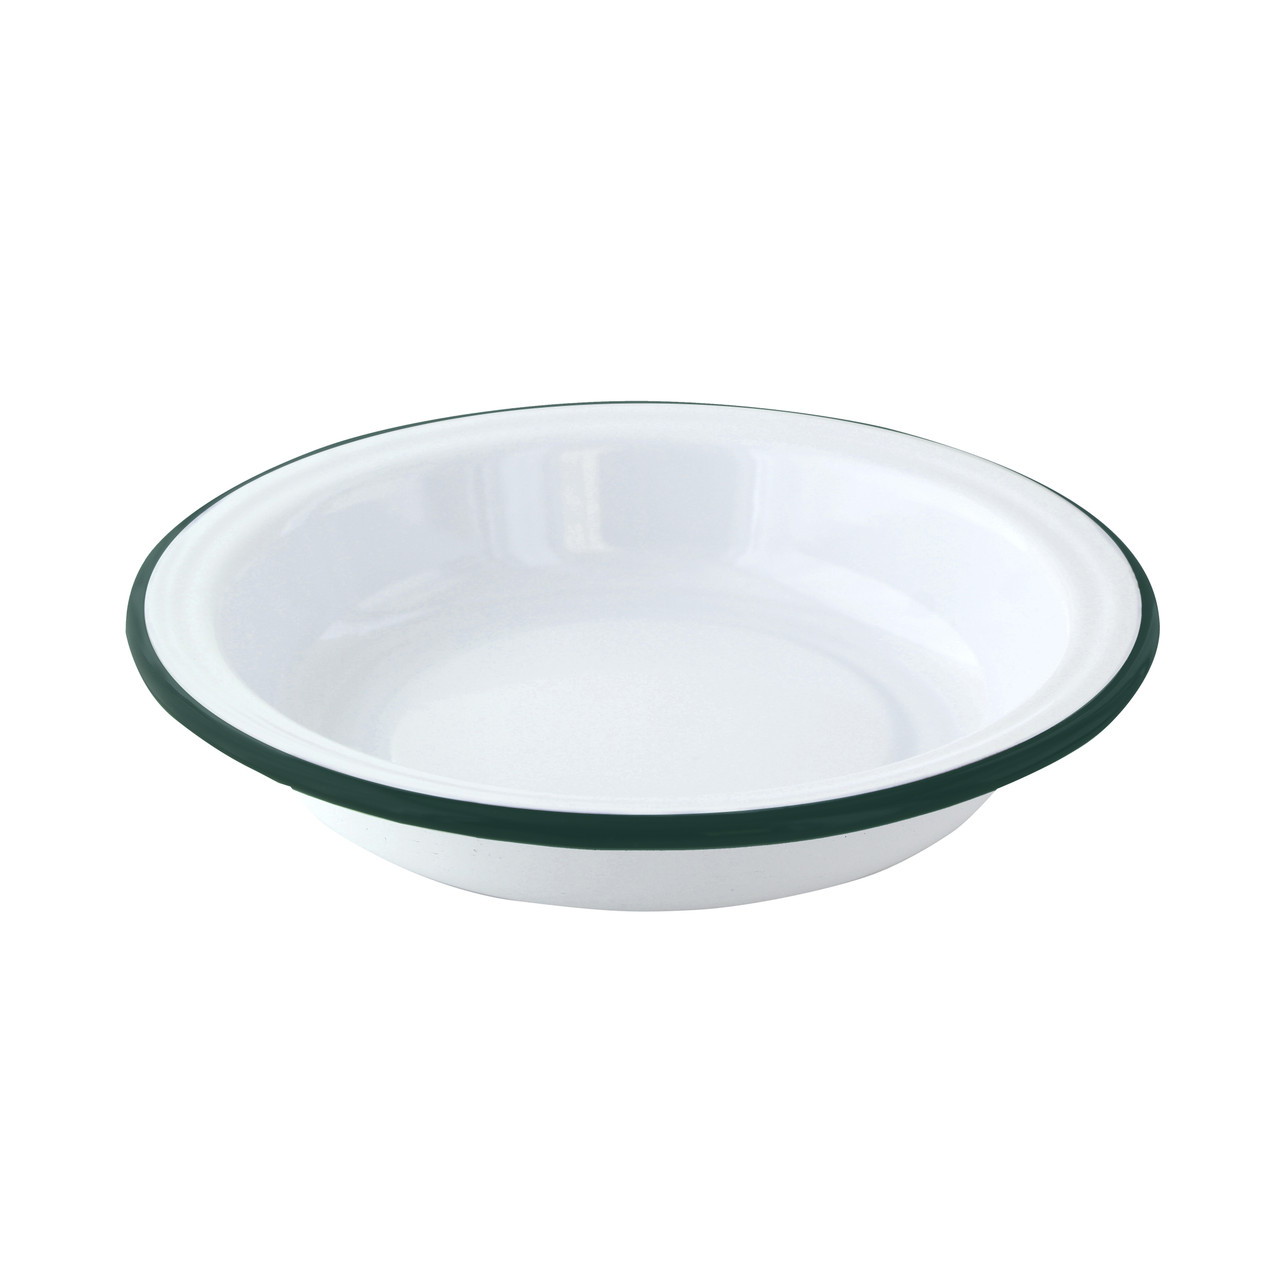 Enamel reusable deep plate white w/green rim 22oz D:7.9in H:1.57in - 12 pcs